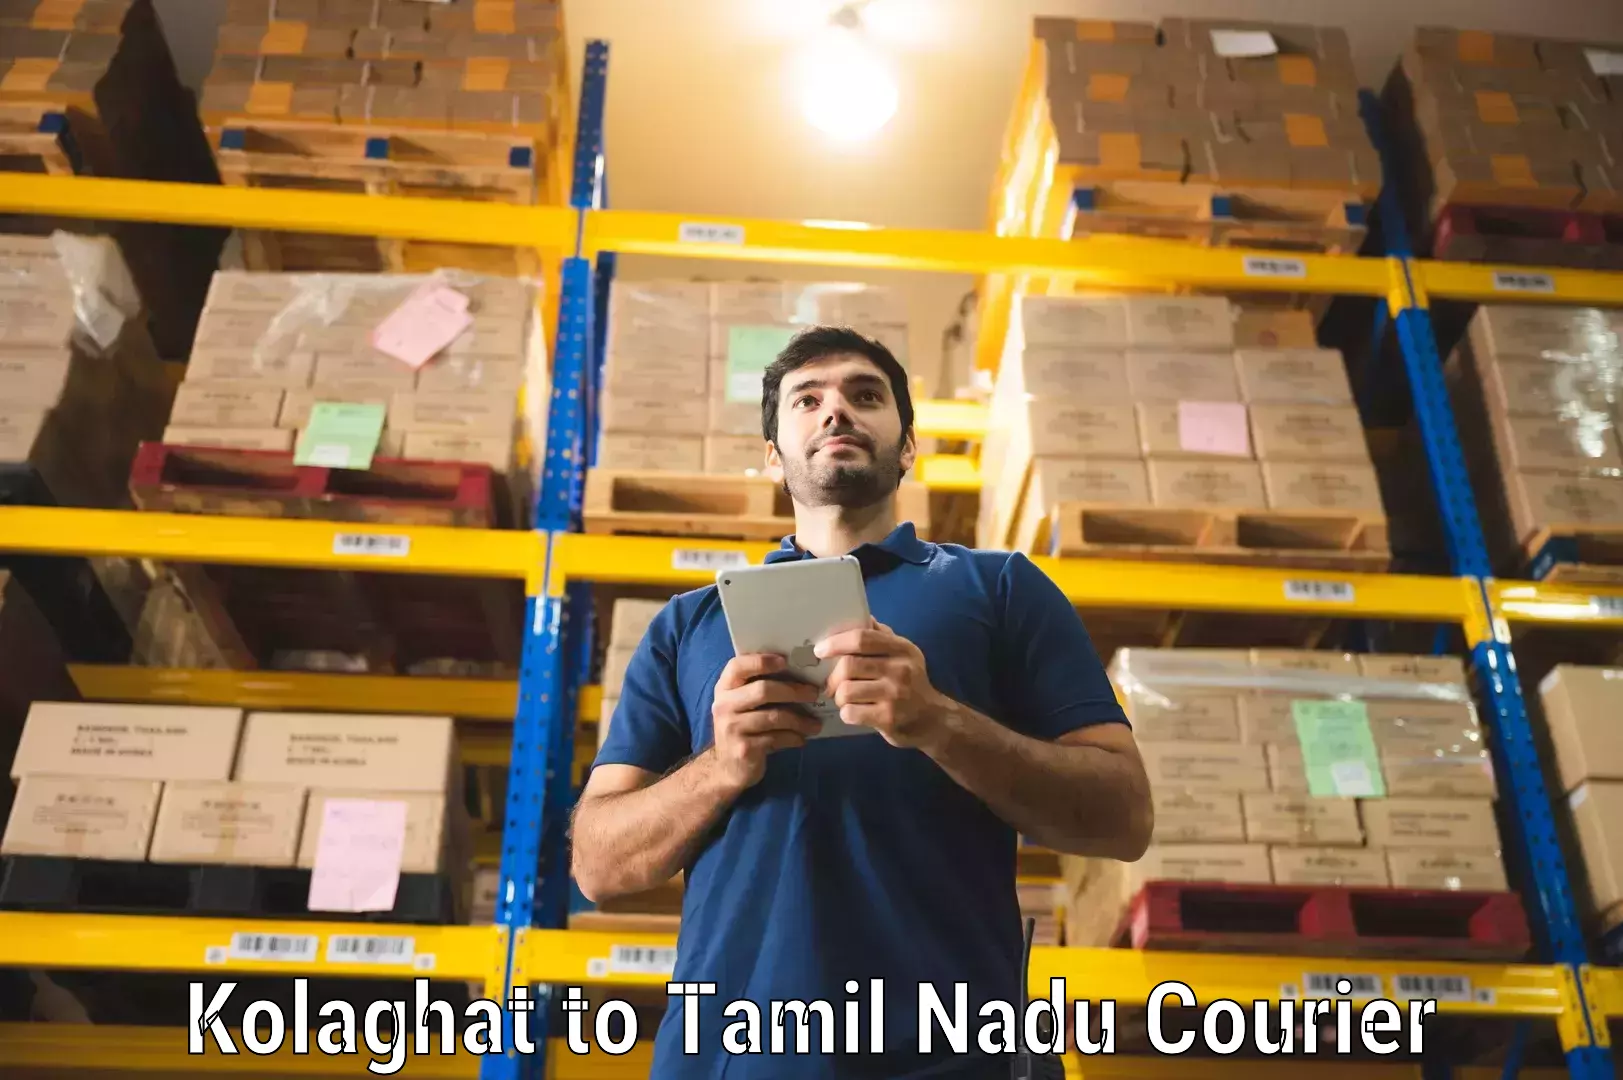 International courier networks Kolaghat to Madurai